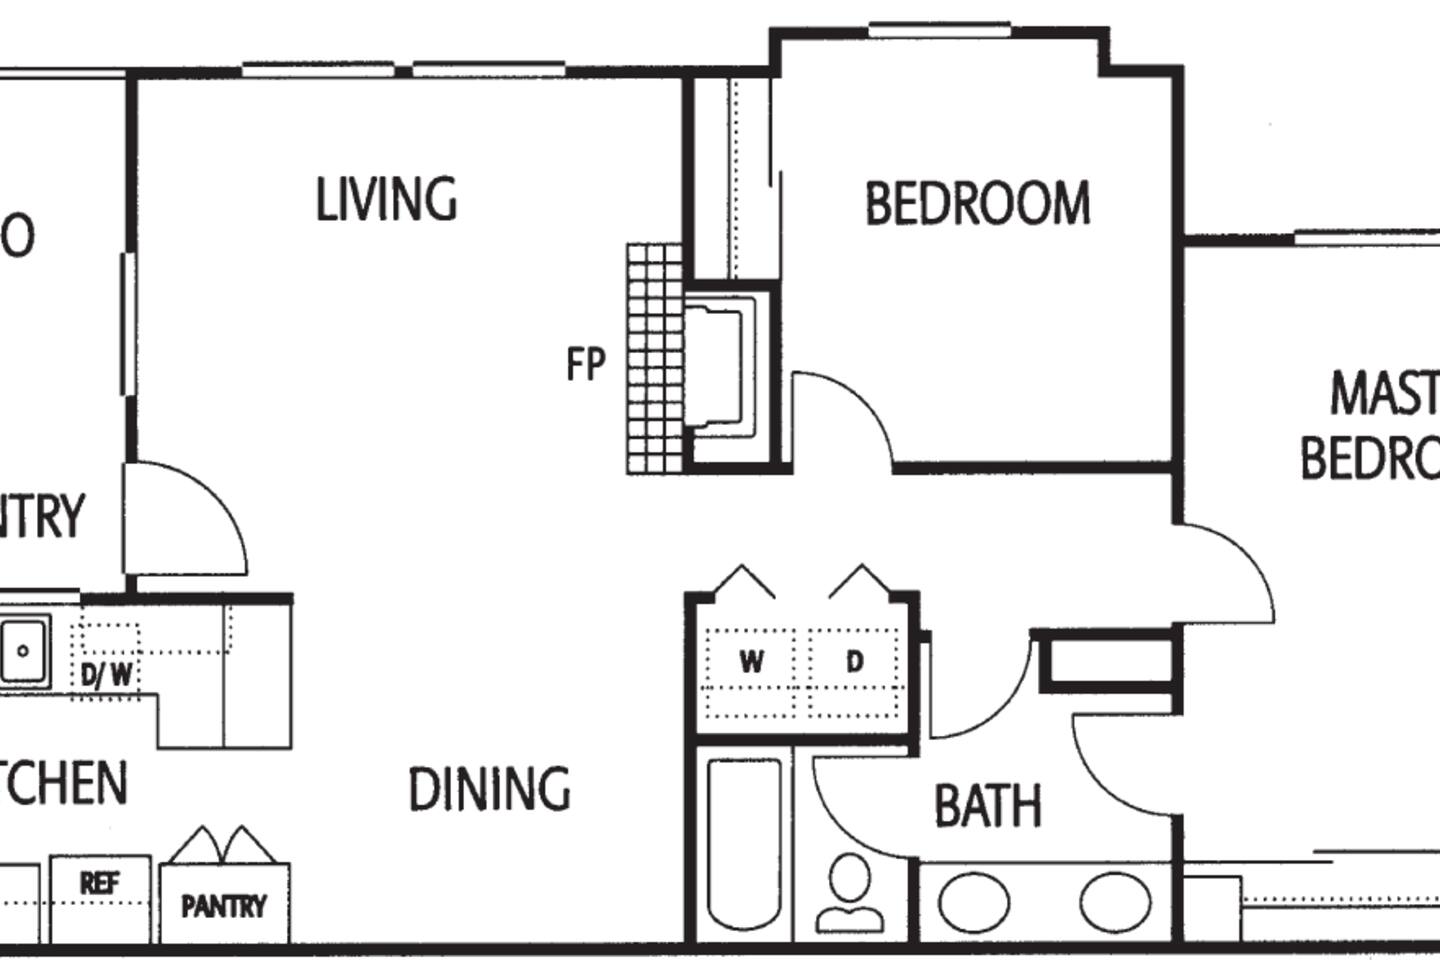 Floorplan diagram for Avalon, showing 2 bedroom